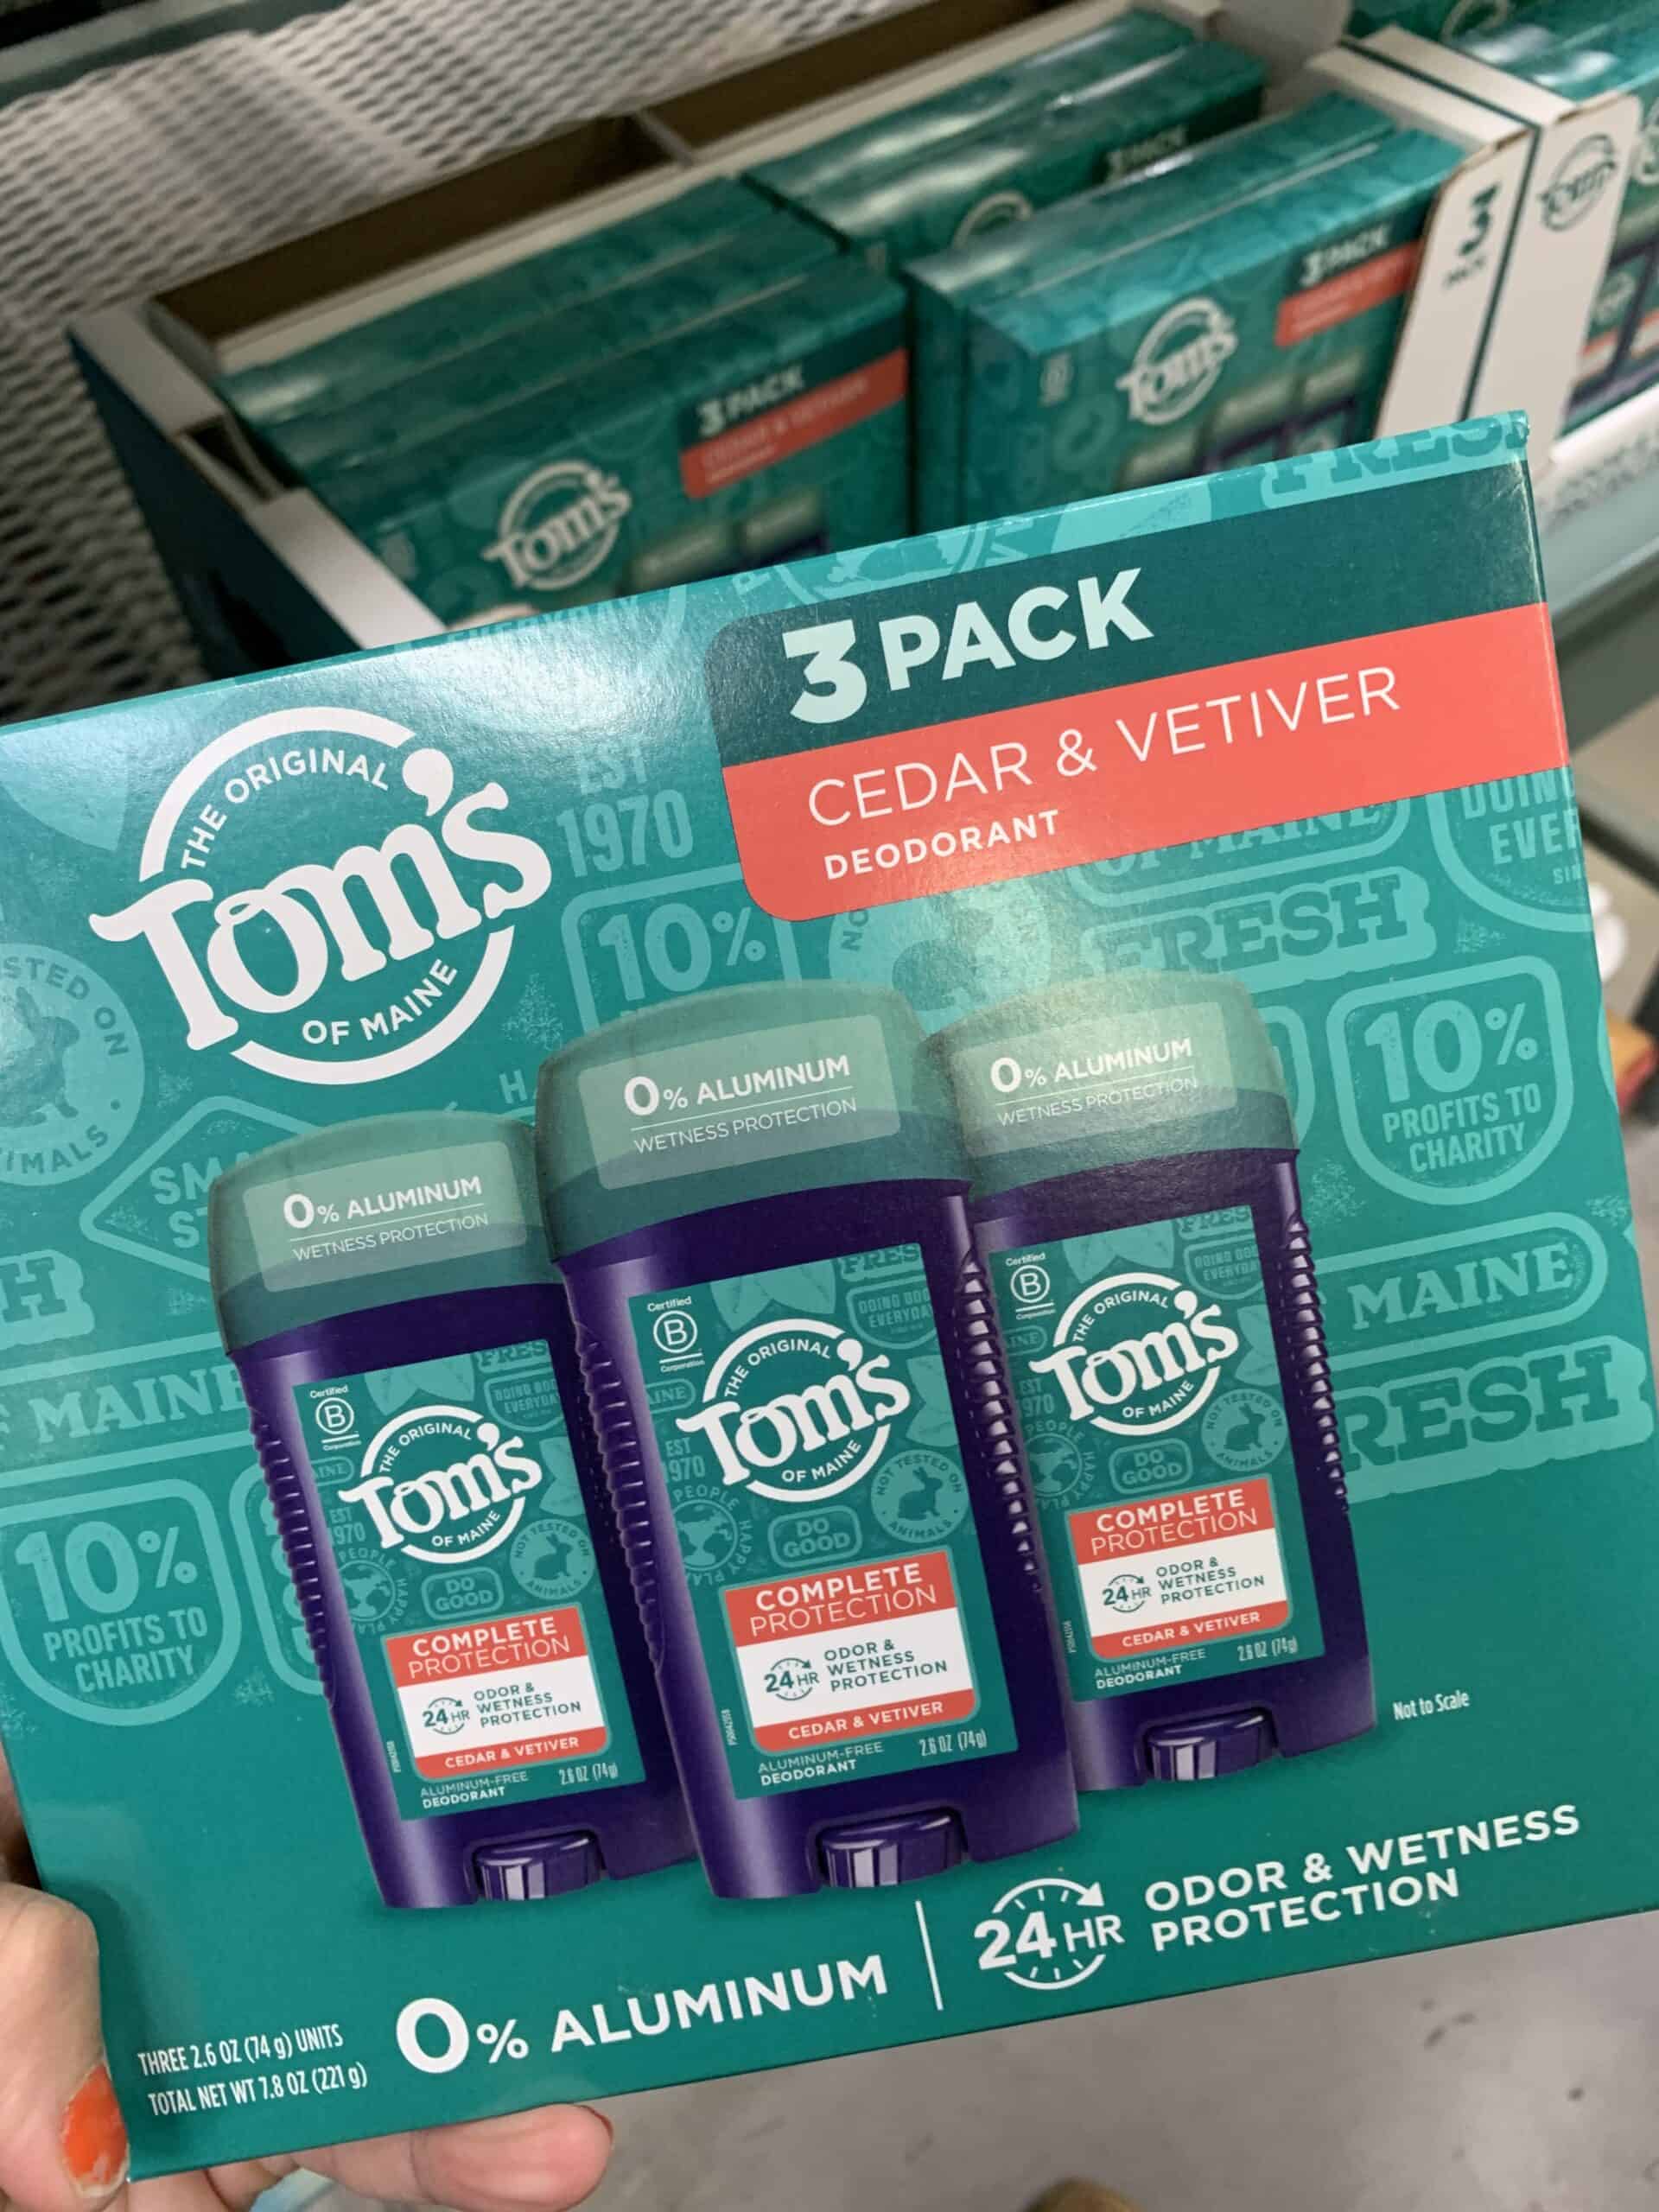 New Tom’s of Maine Deodorant at BJ’s